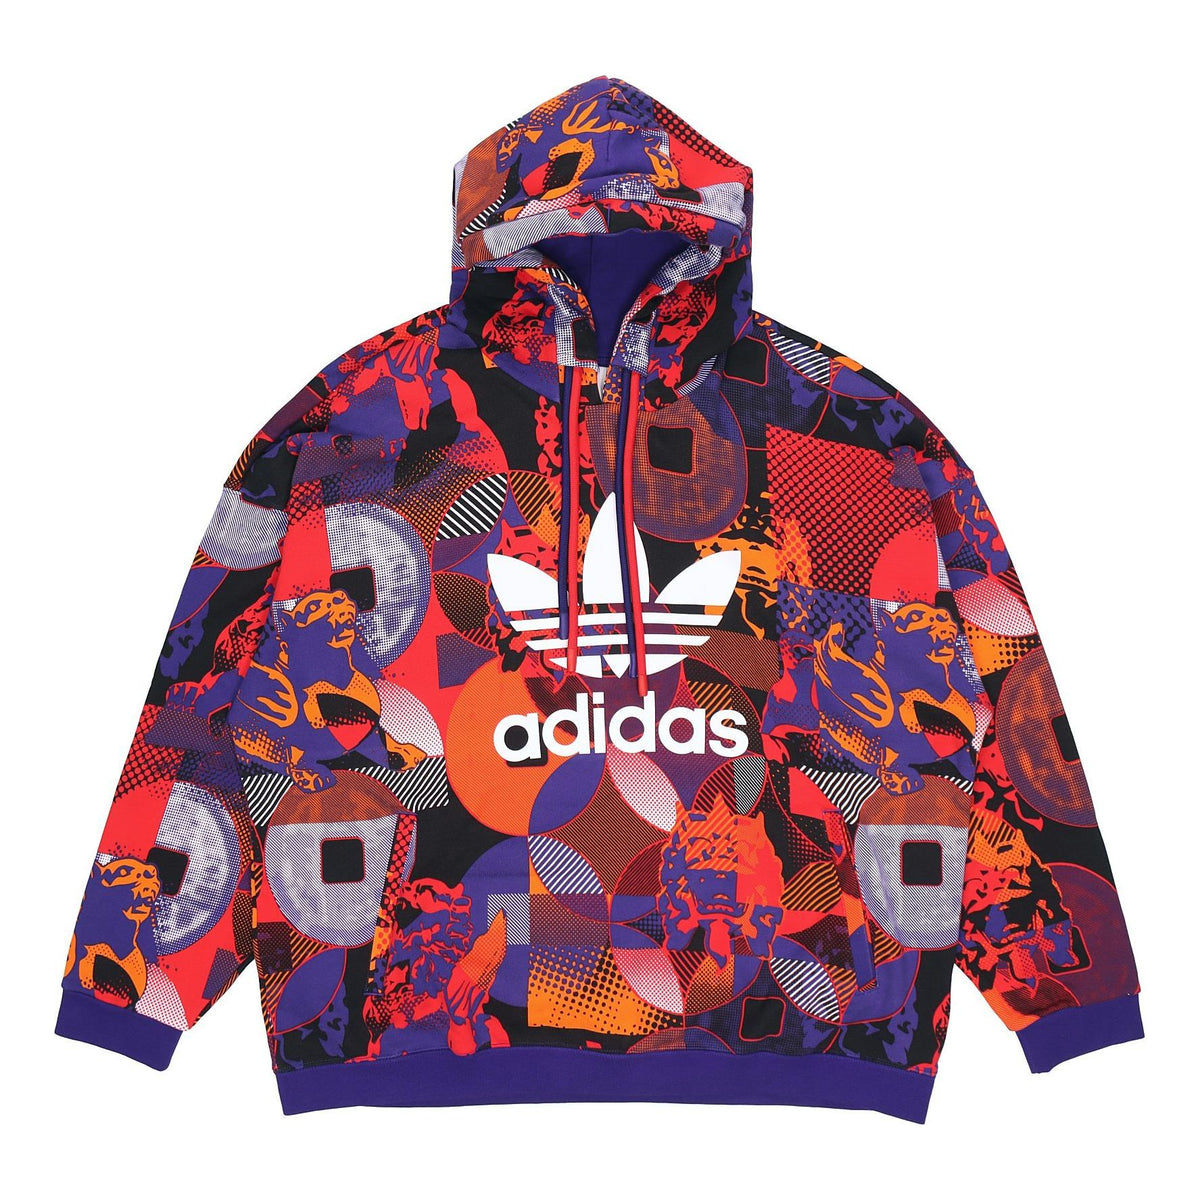 Youth's Adidas New York Knicks Hoodie Size: Medium 10/12